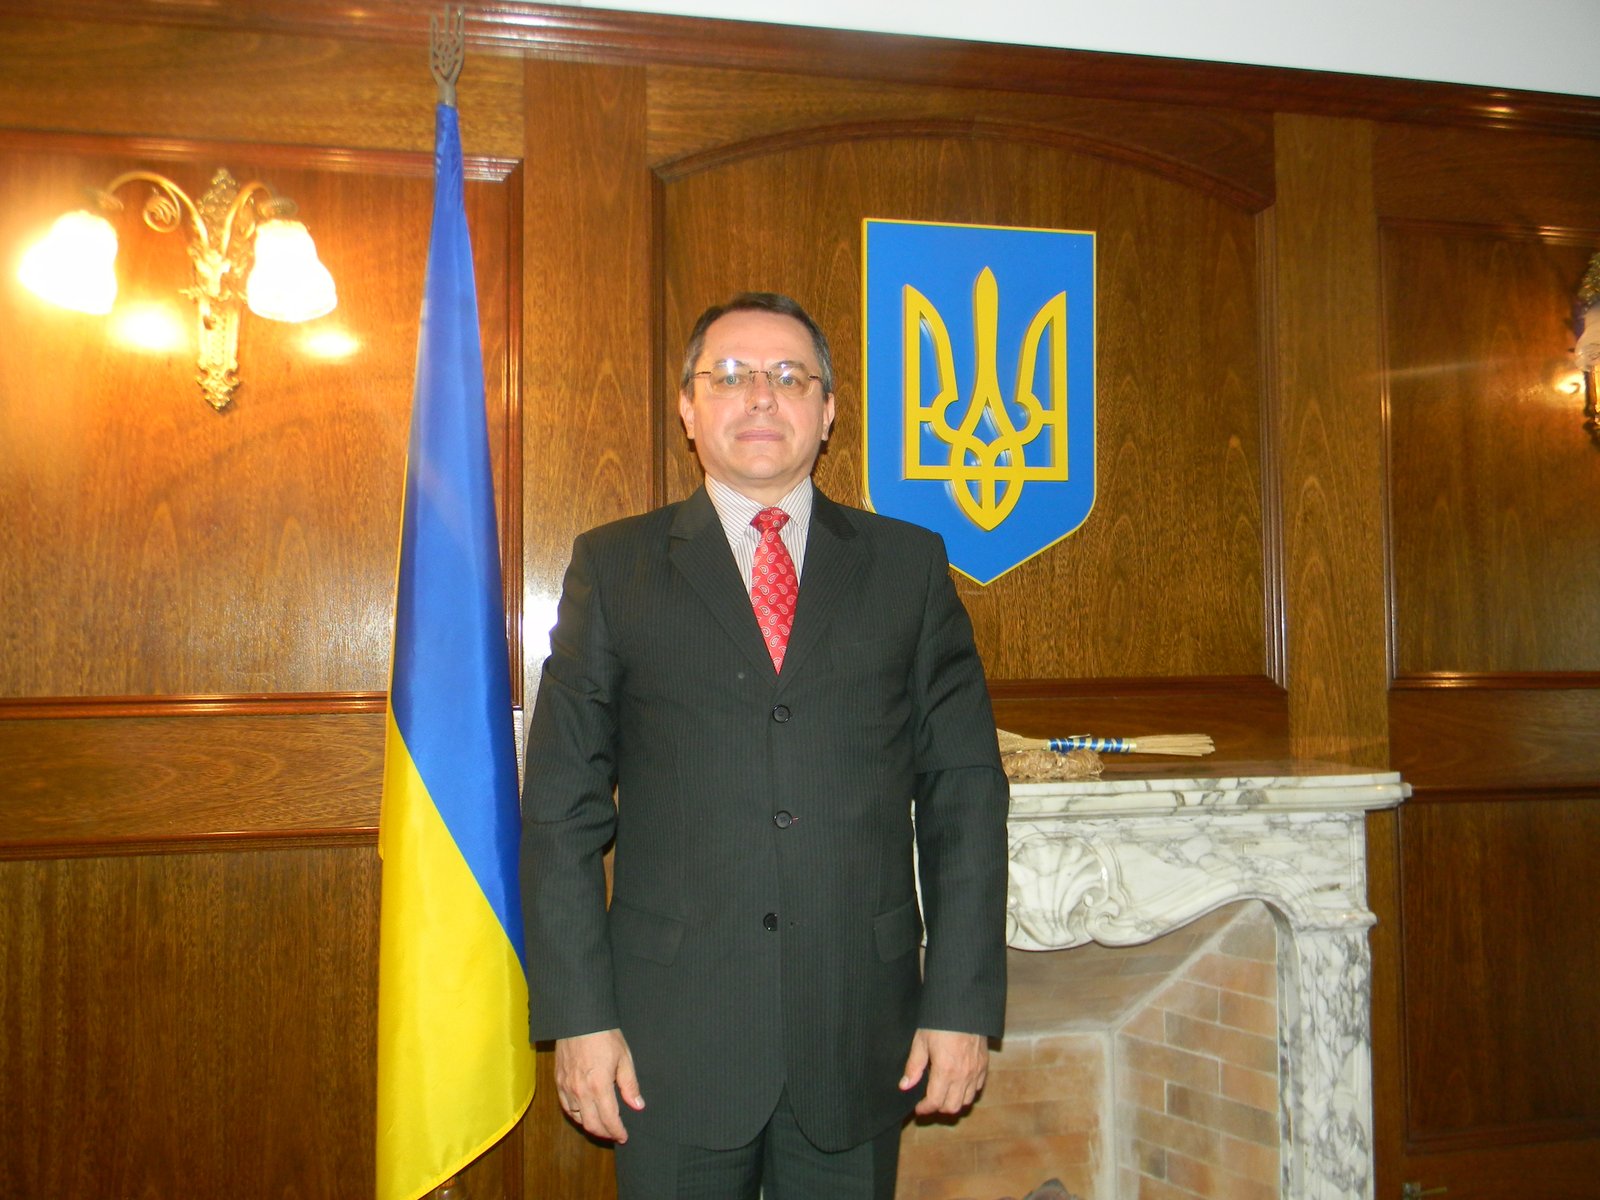 La voz de la diplomacia de Ucrania en Argentina, entrevista al Embajador Yurii Duidin